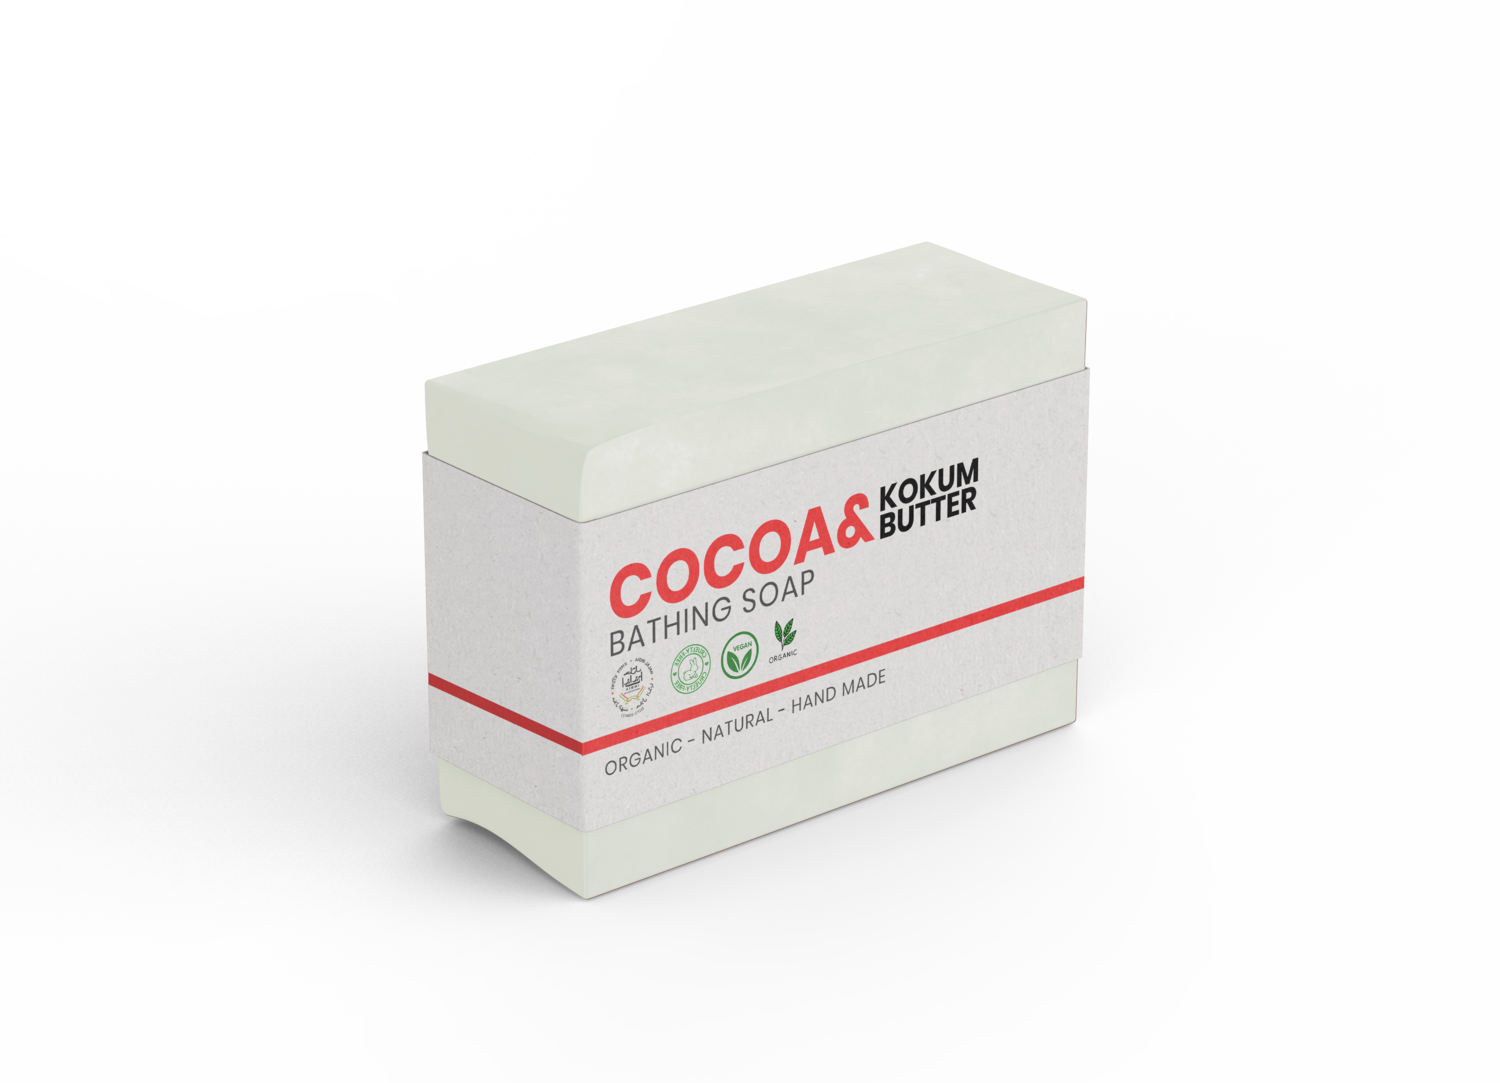 Cocoa & Kokum Butter Soap 